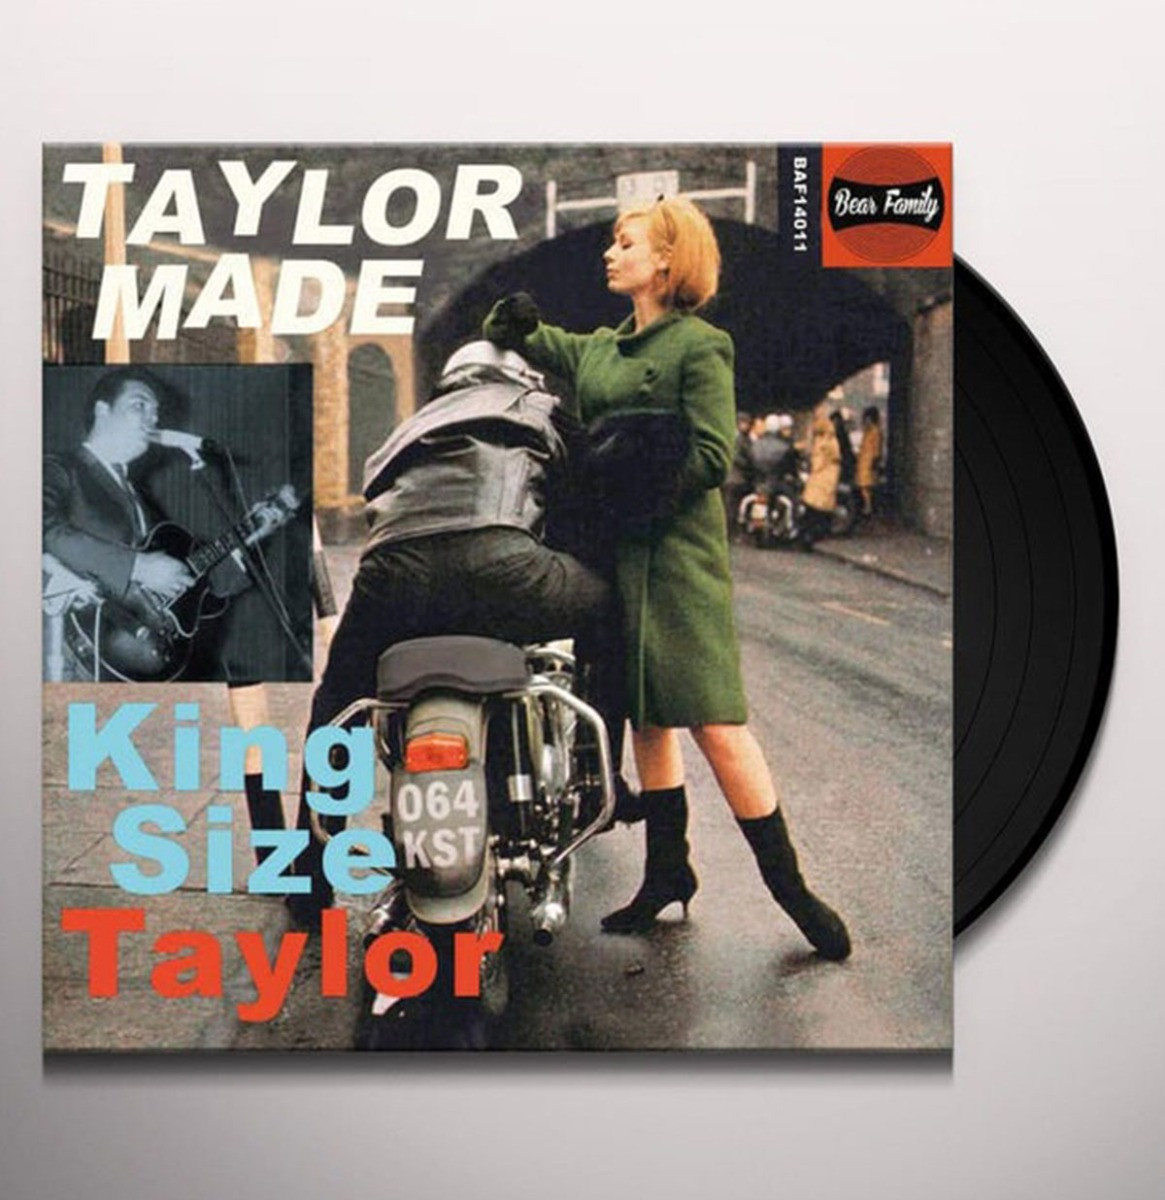 King Size Taylor - Taylor Made 10" Vinyl+CD